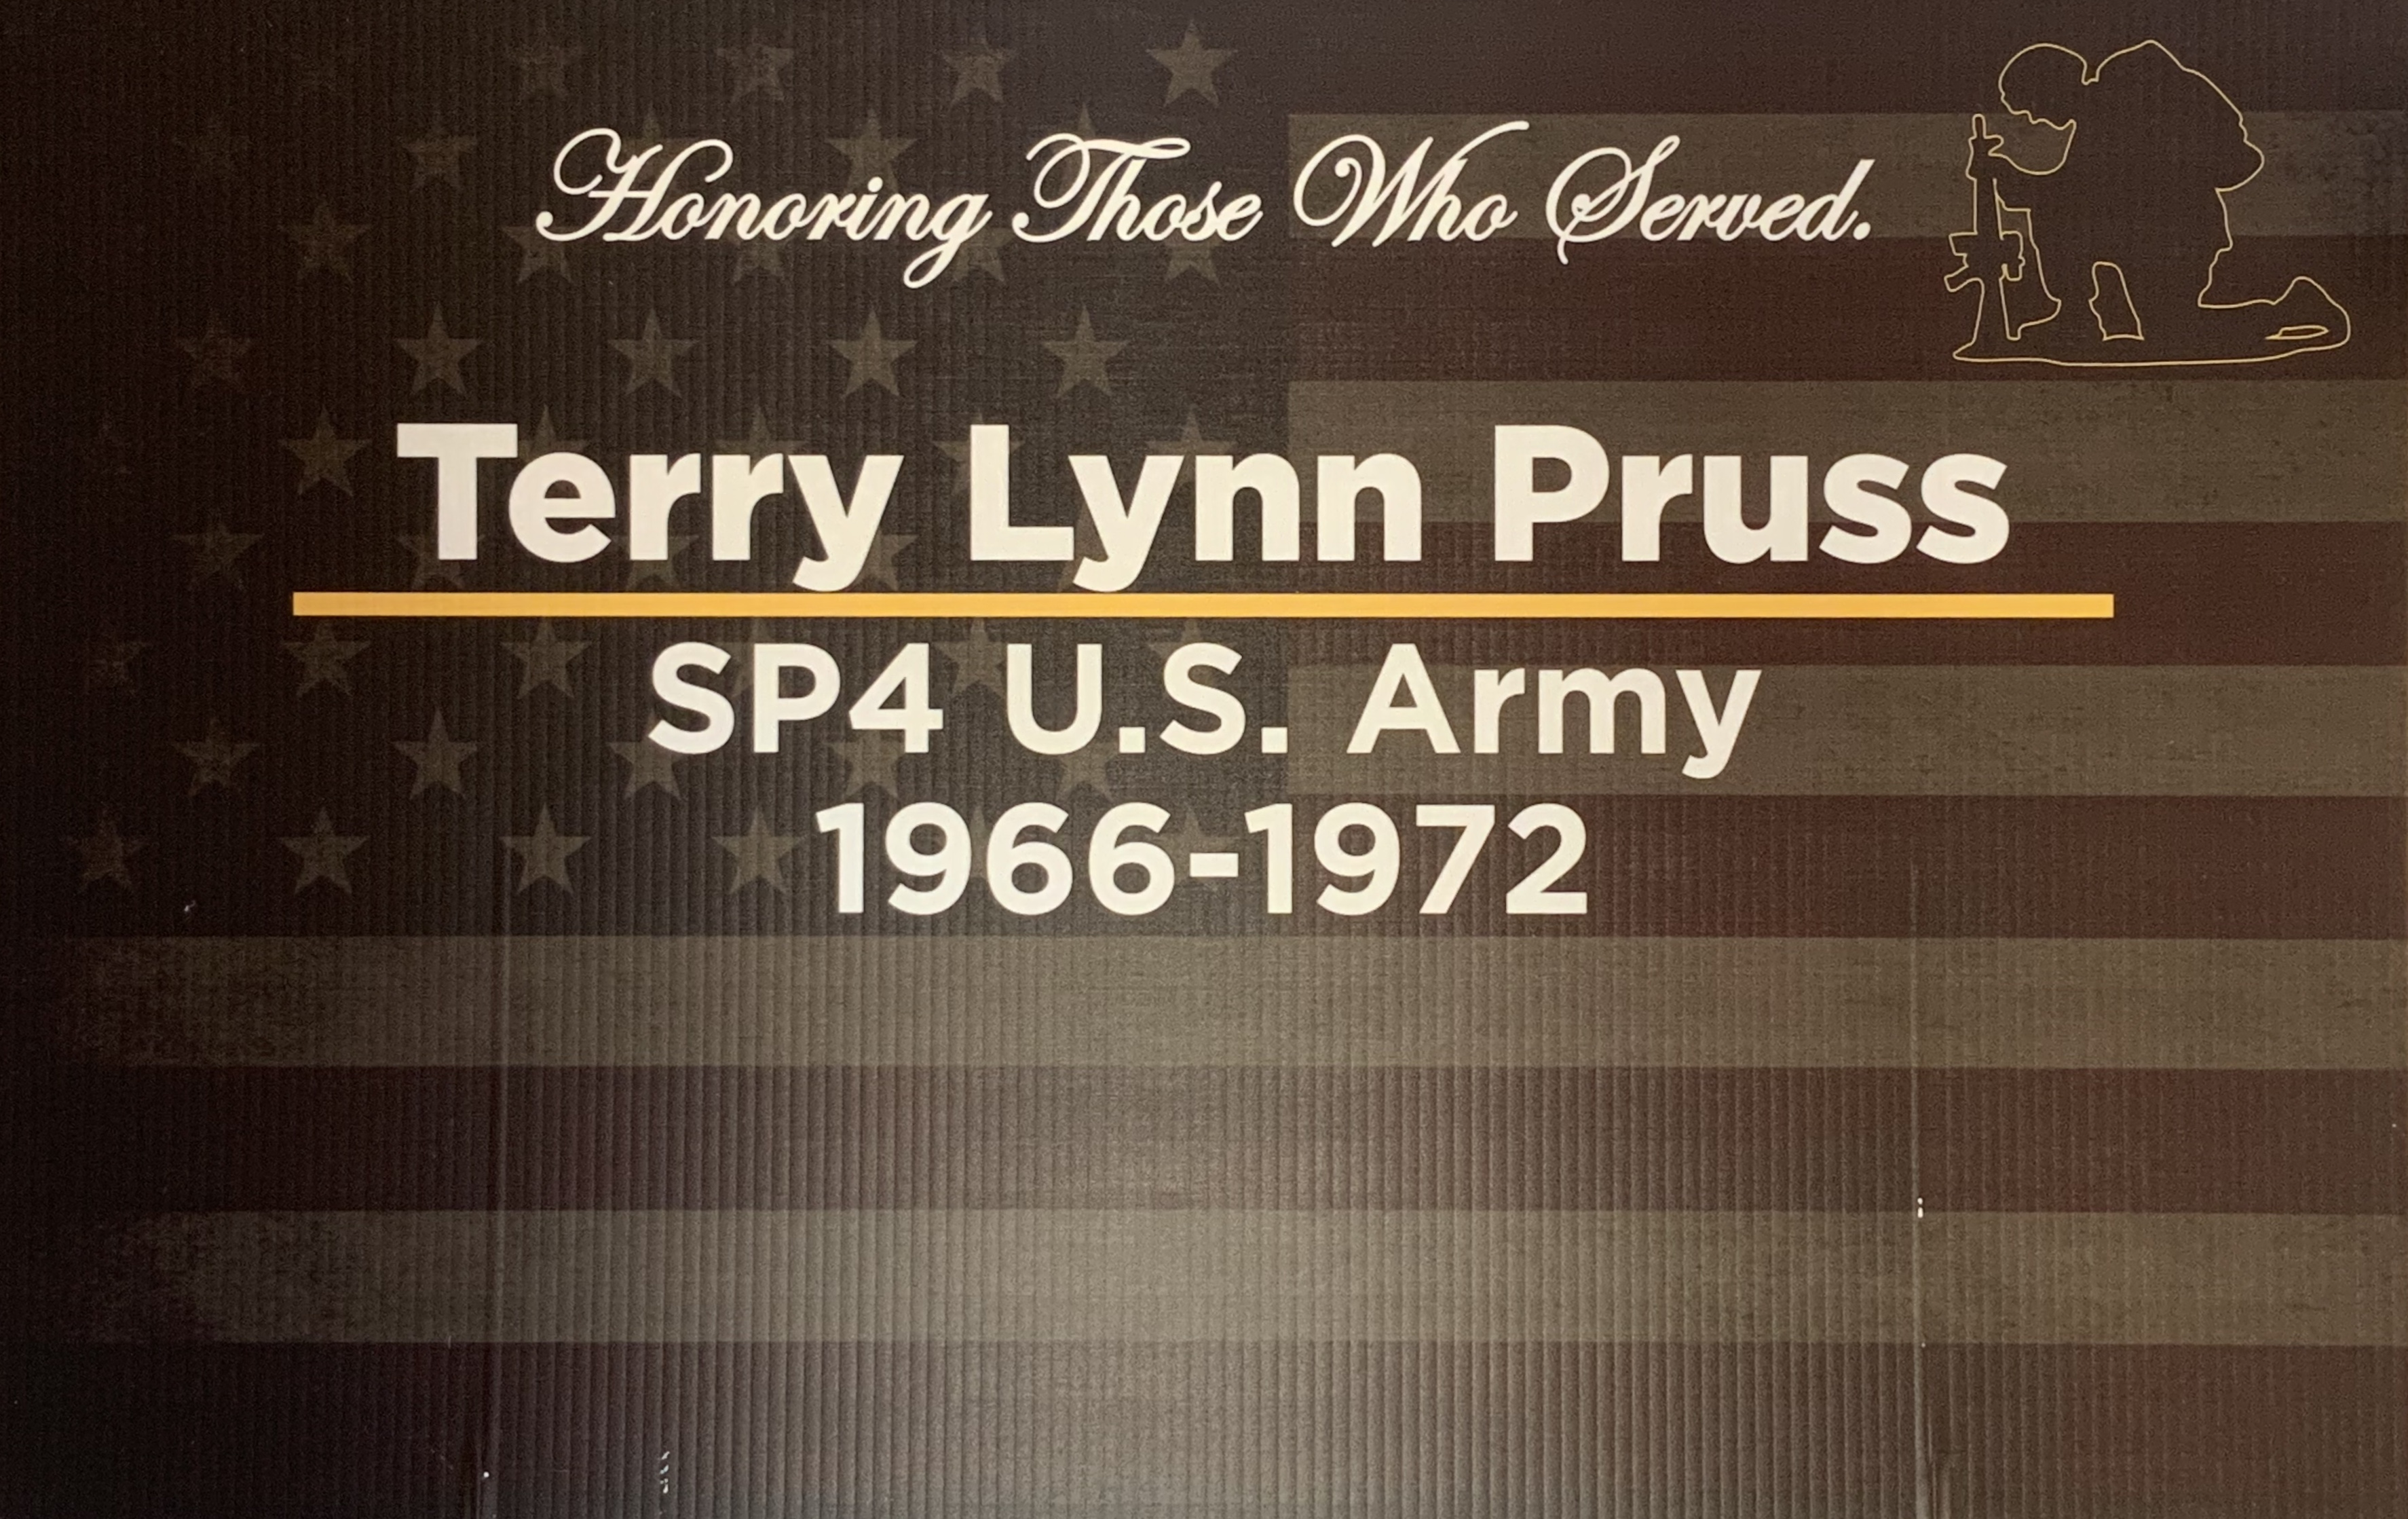 Terry Lynn Pruss